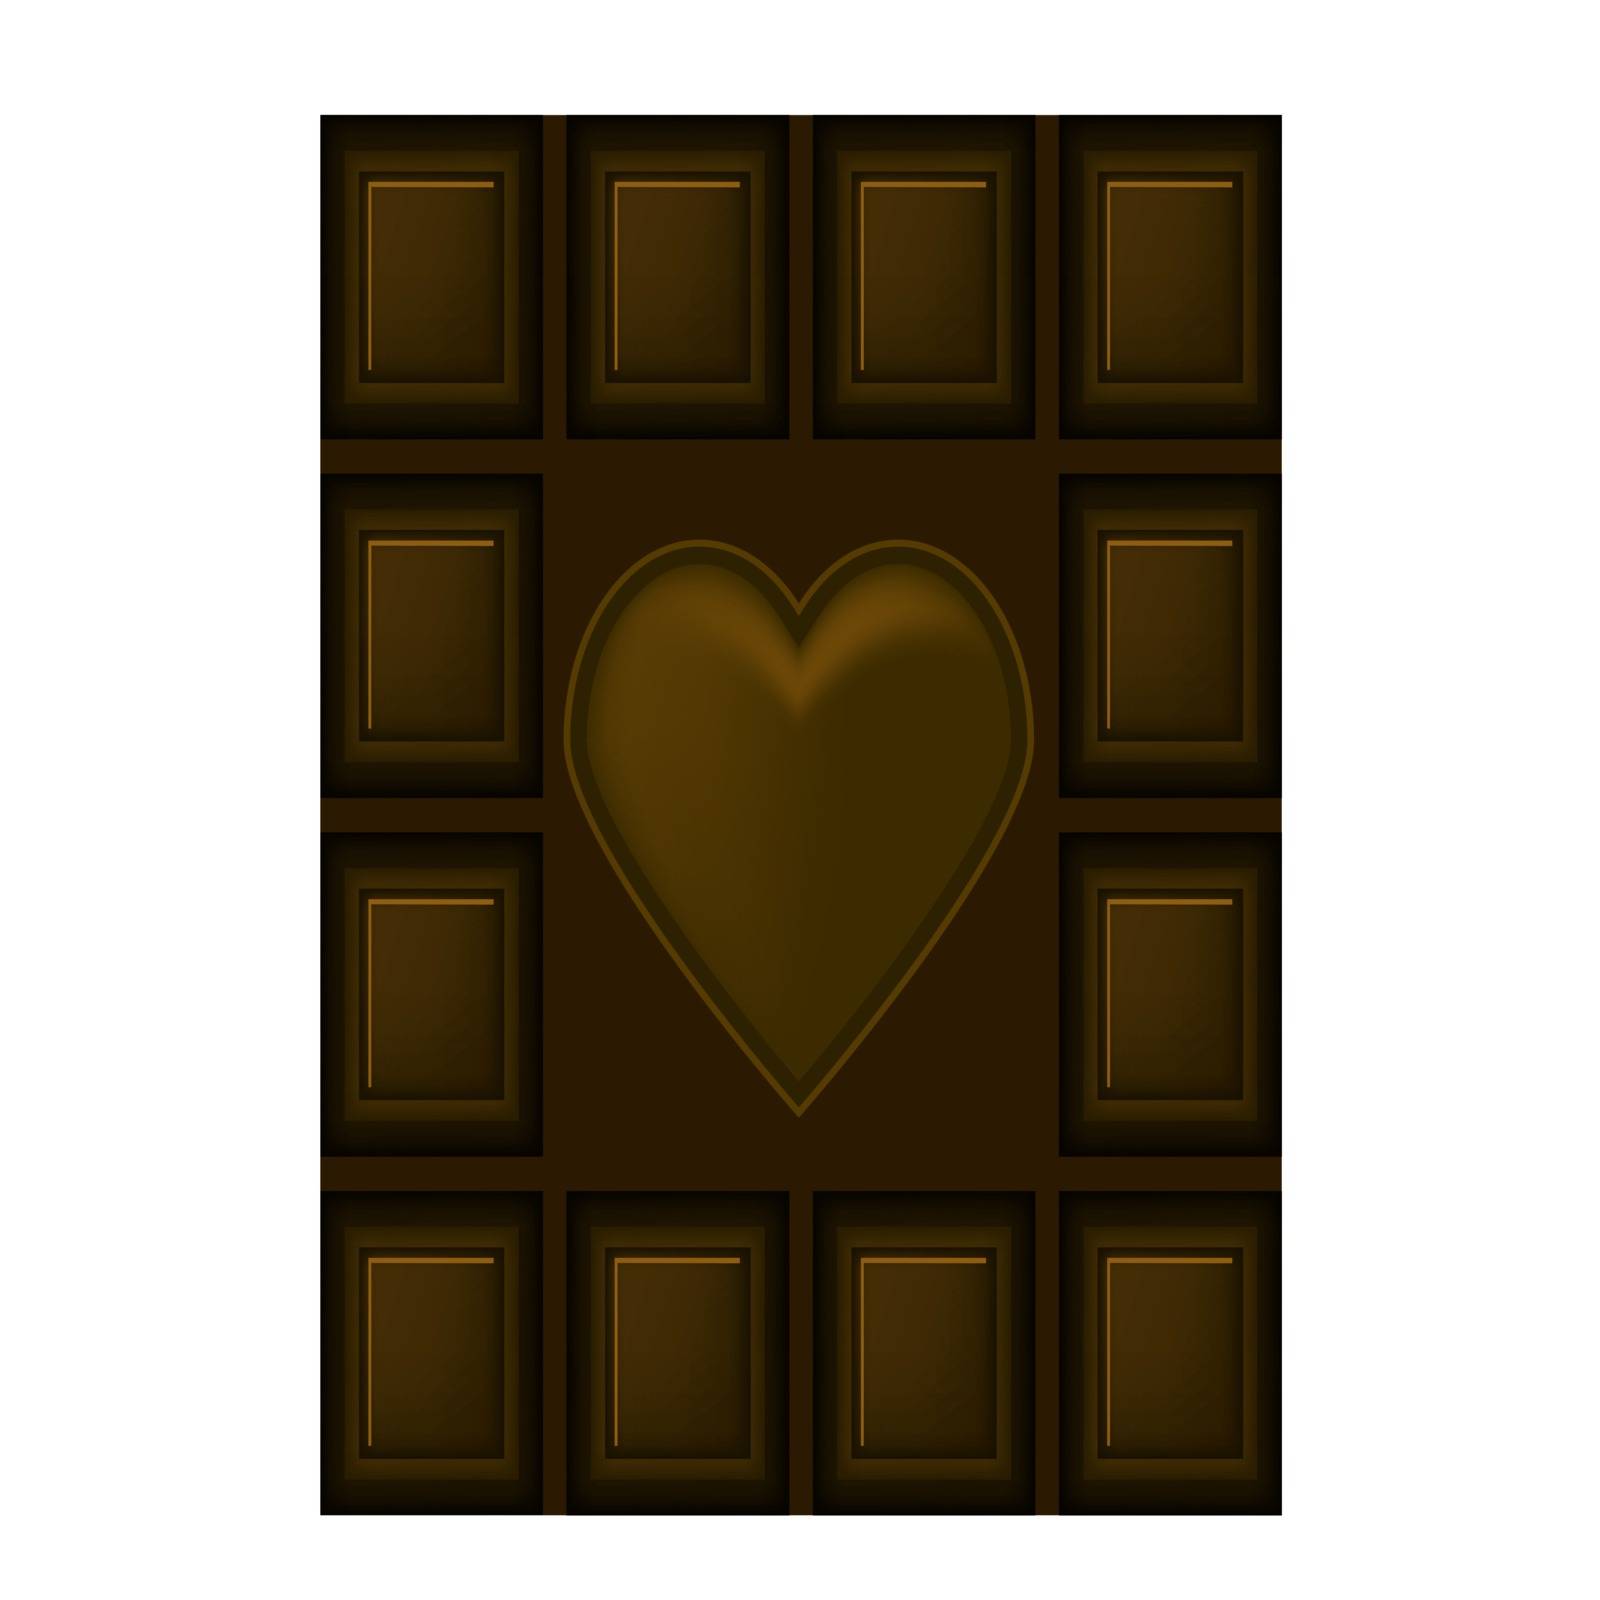 Chocolate Bar by valeo5